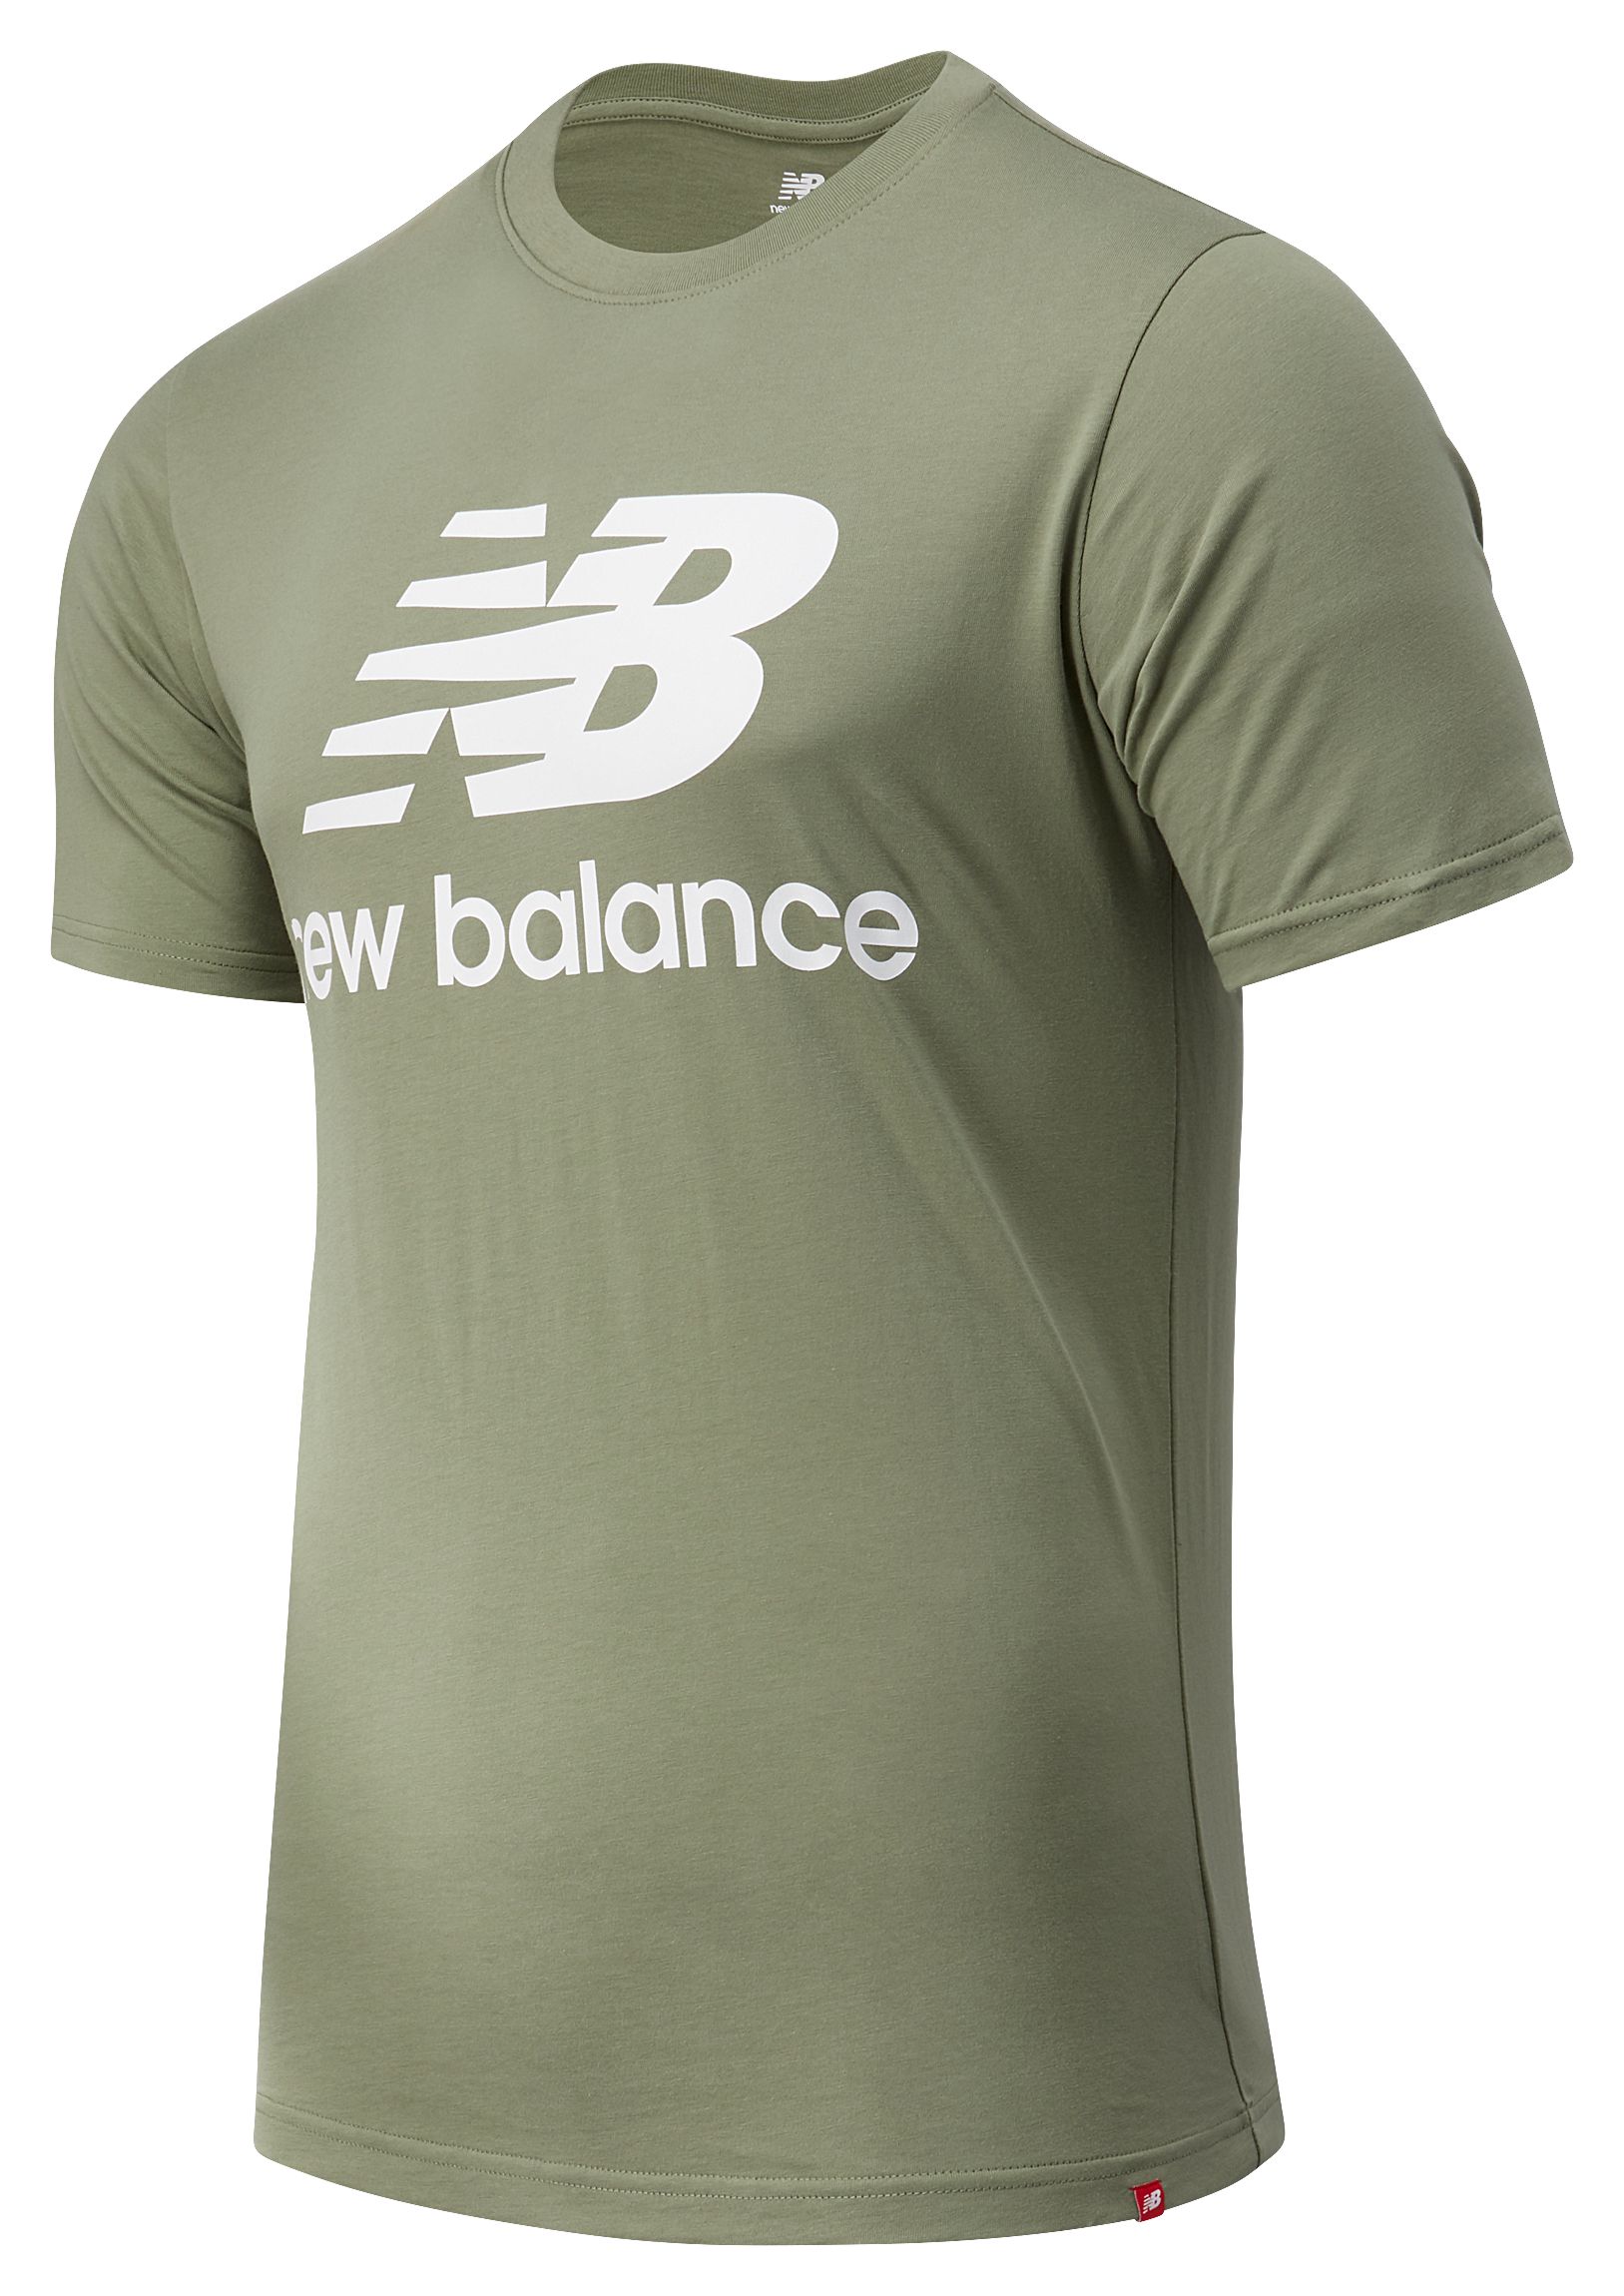 new balance be great shirt